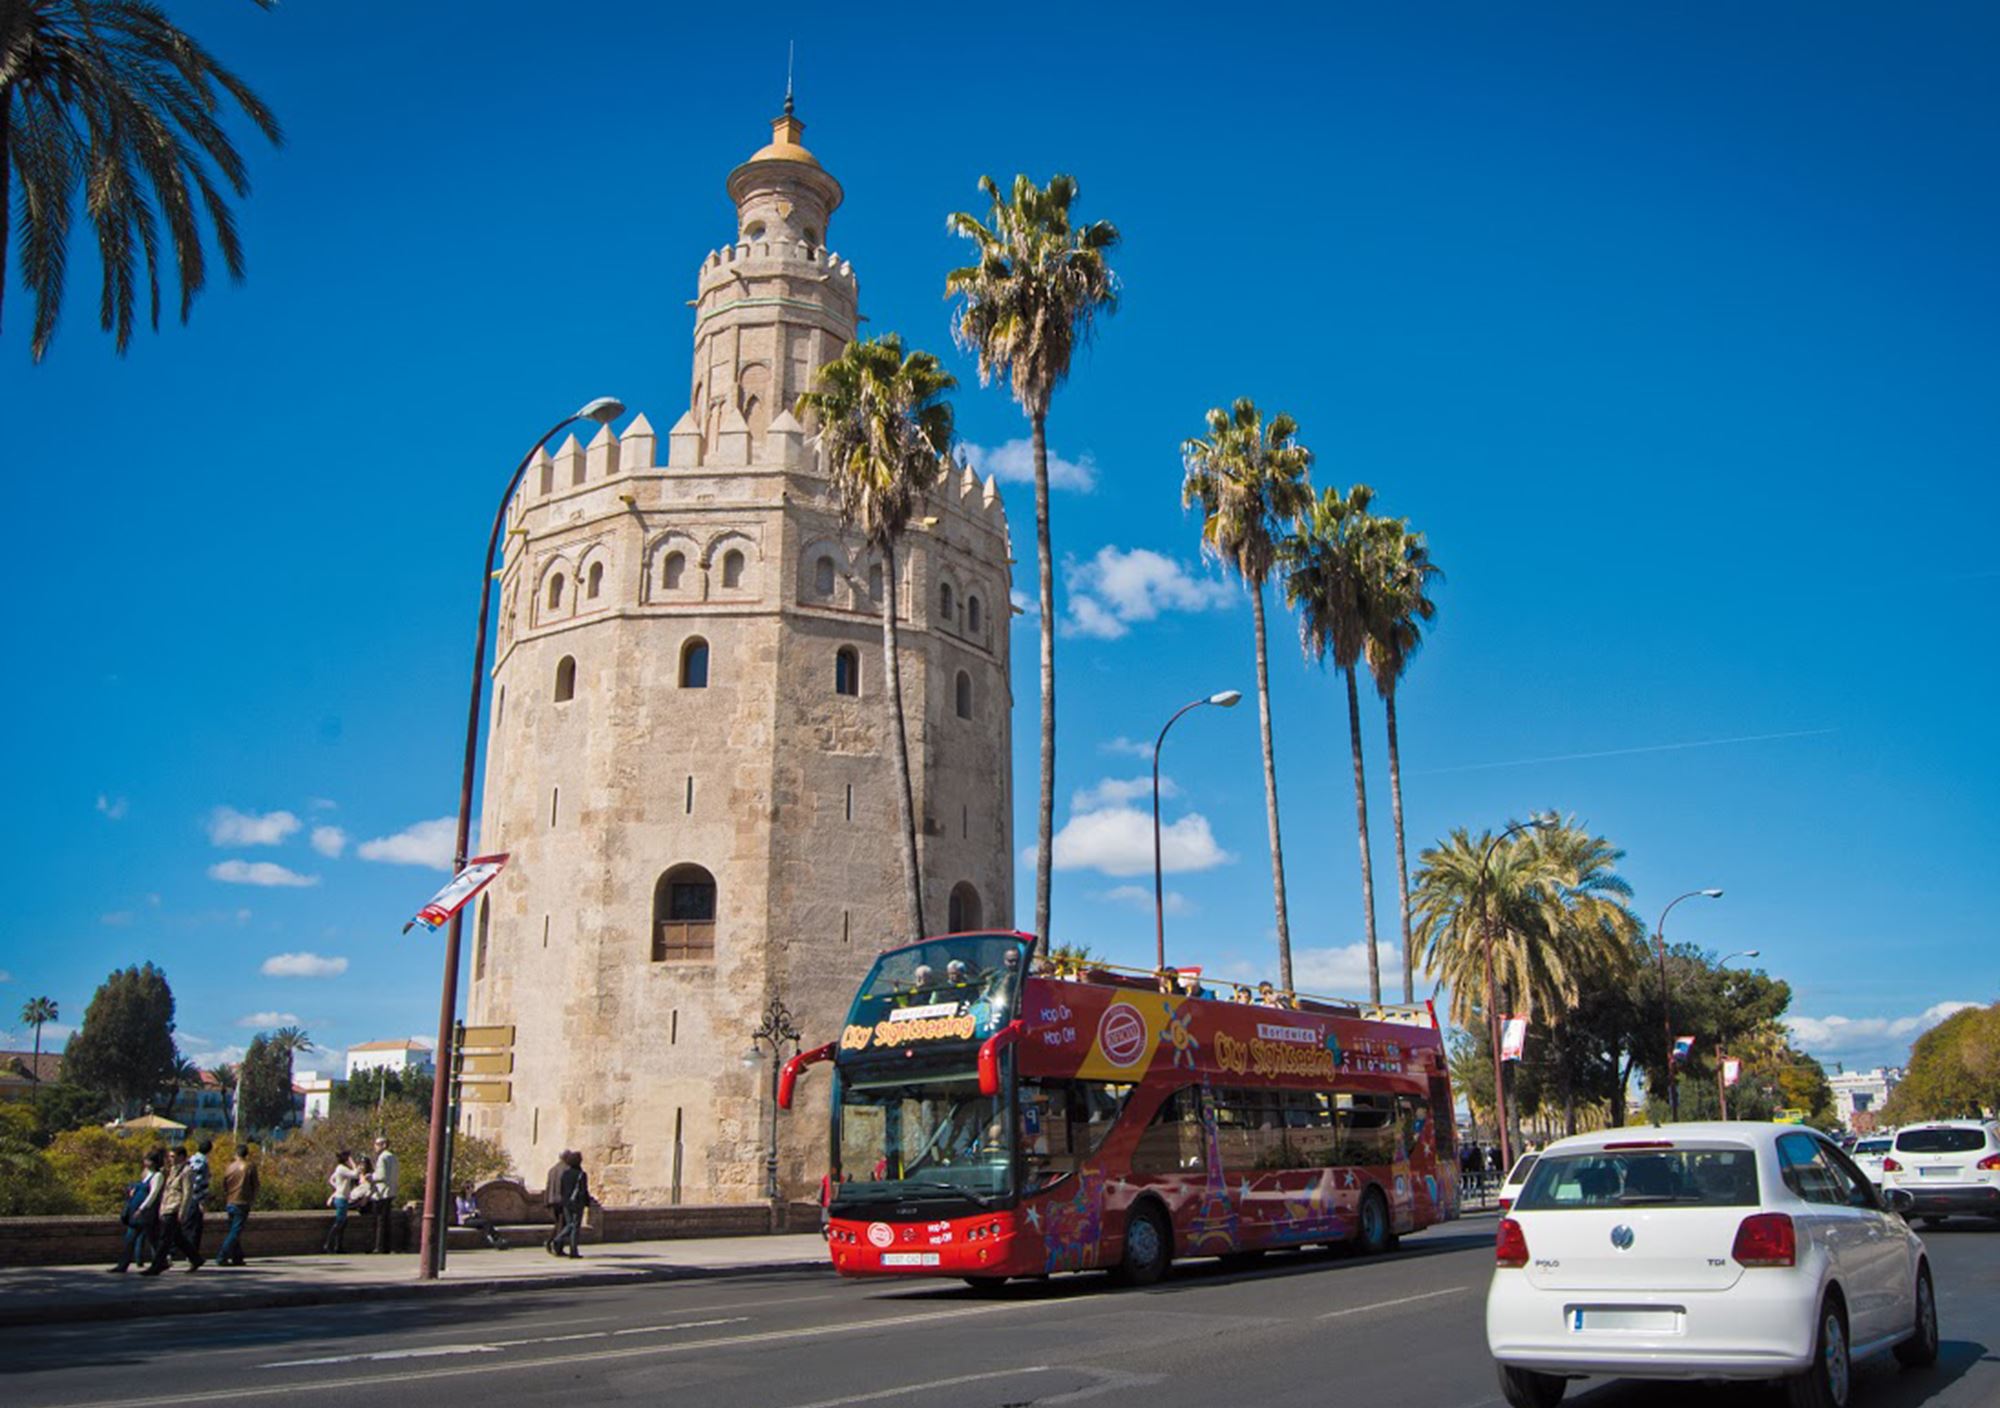 réserver guidées tours Pass City Sightseeing Sevilla Experience acheter billets visiter